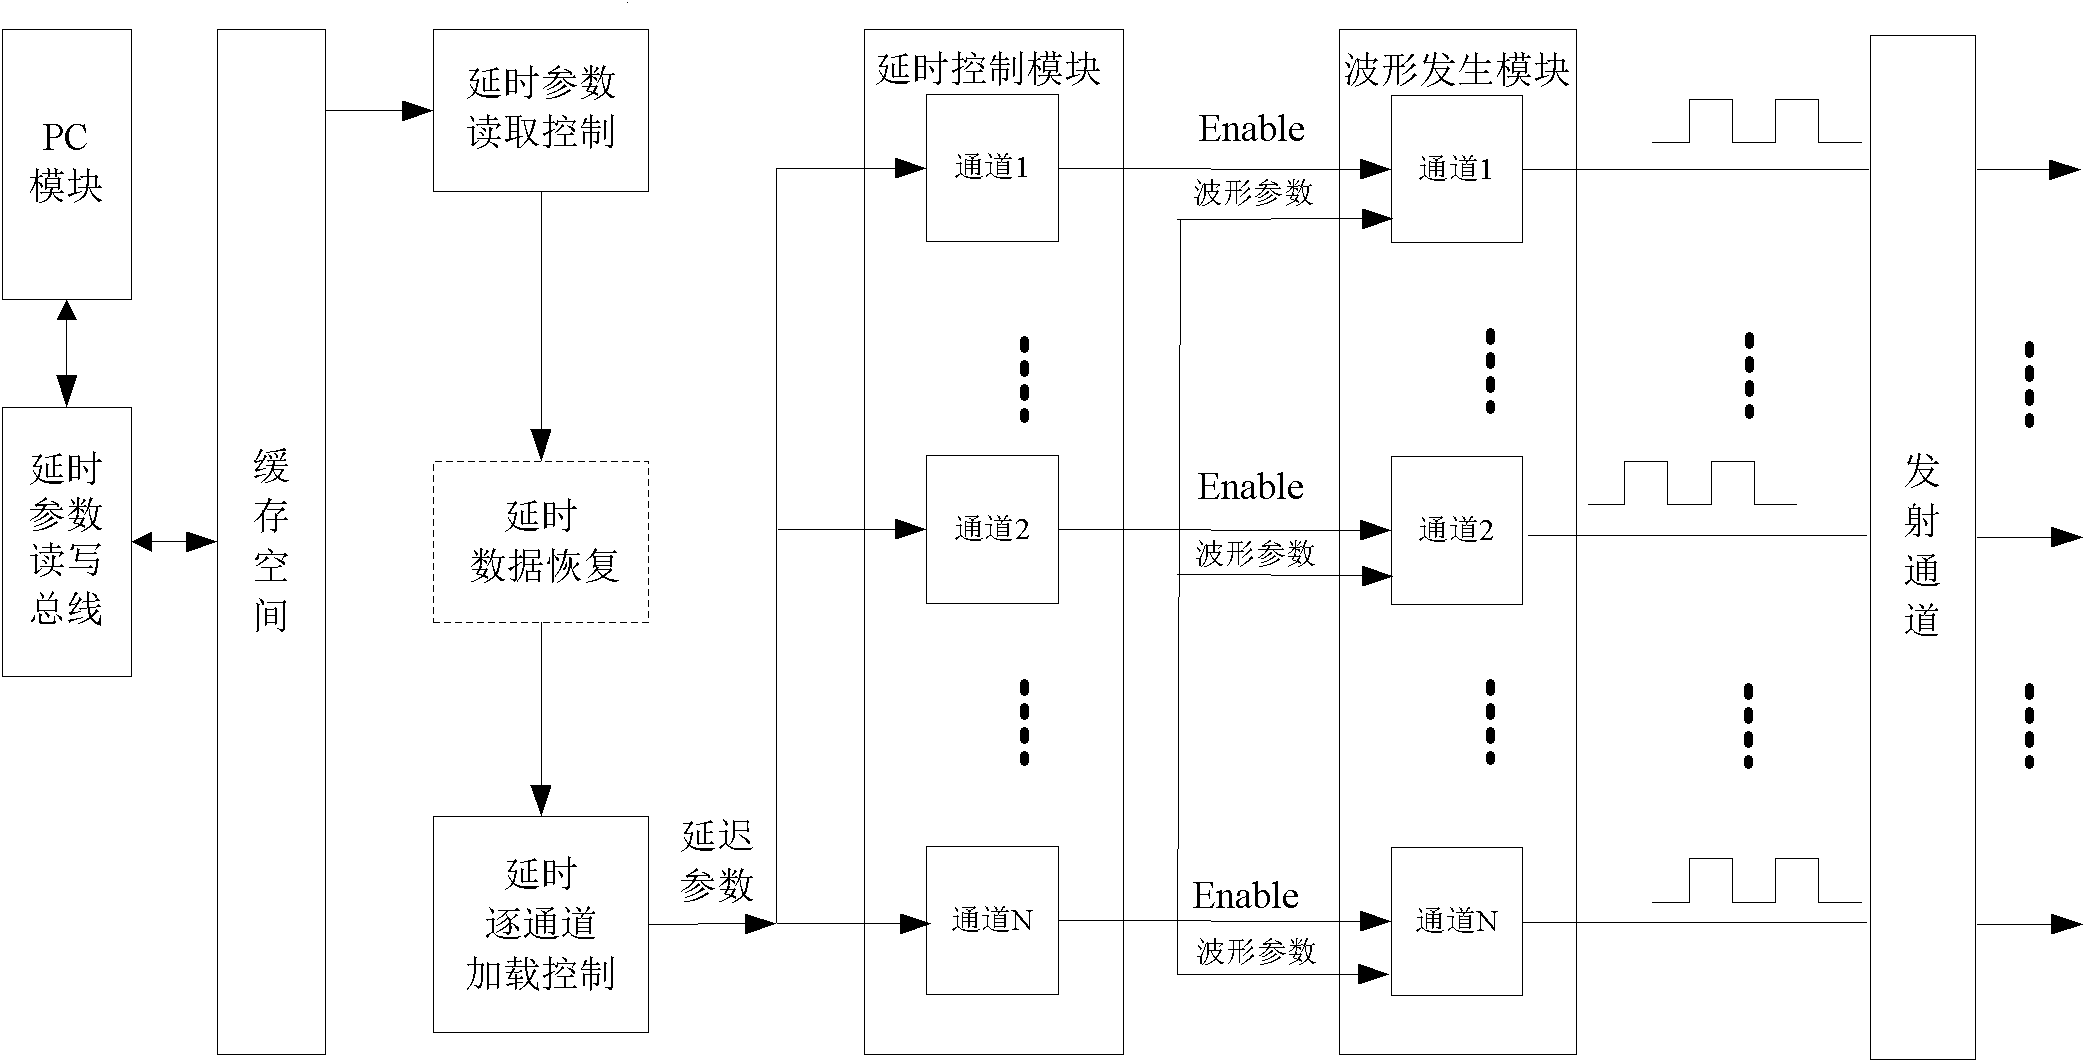 Method for processing ultrasonic emission delay